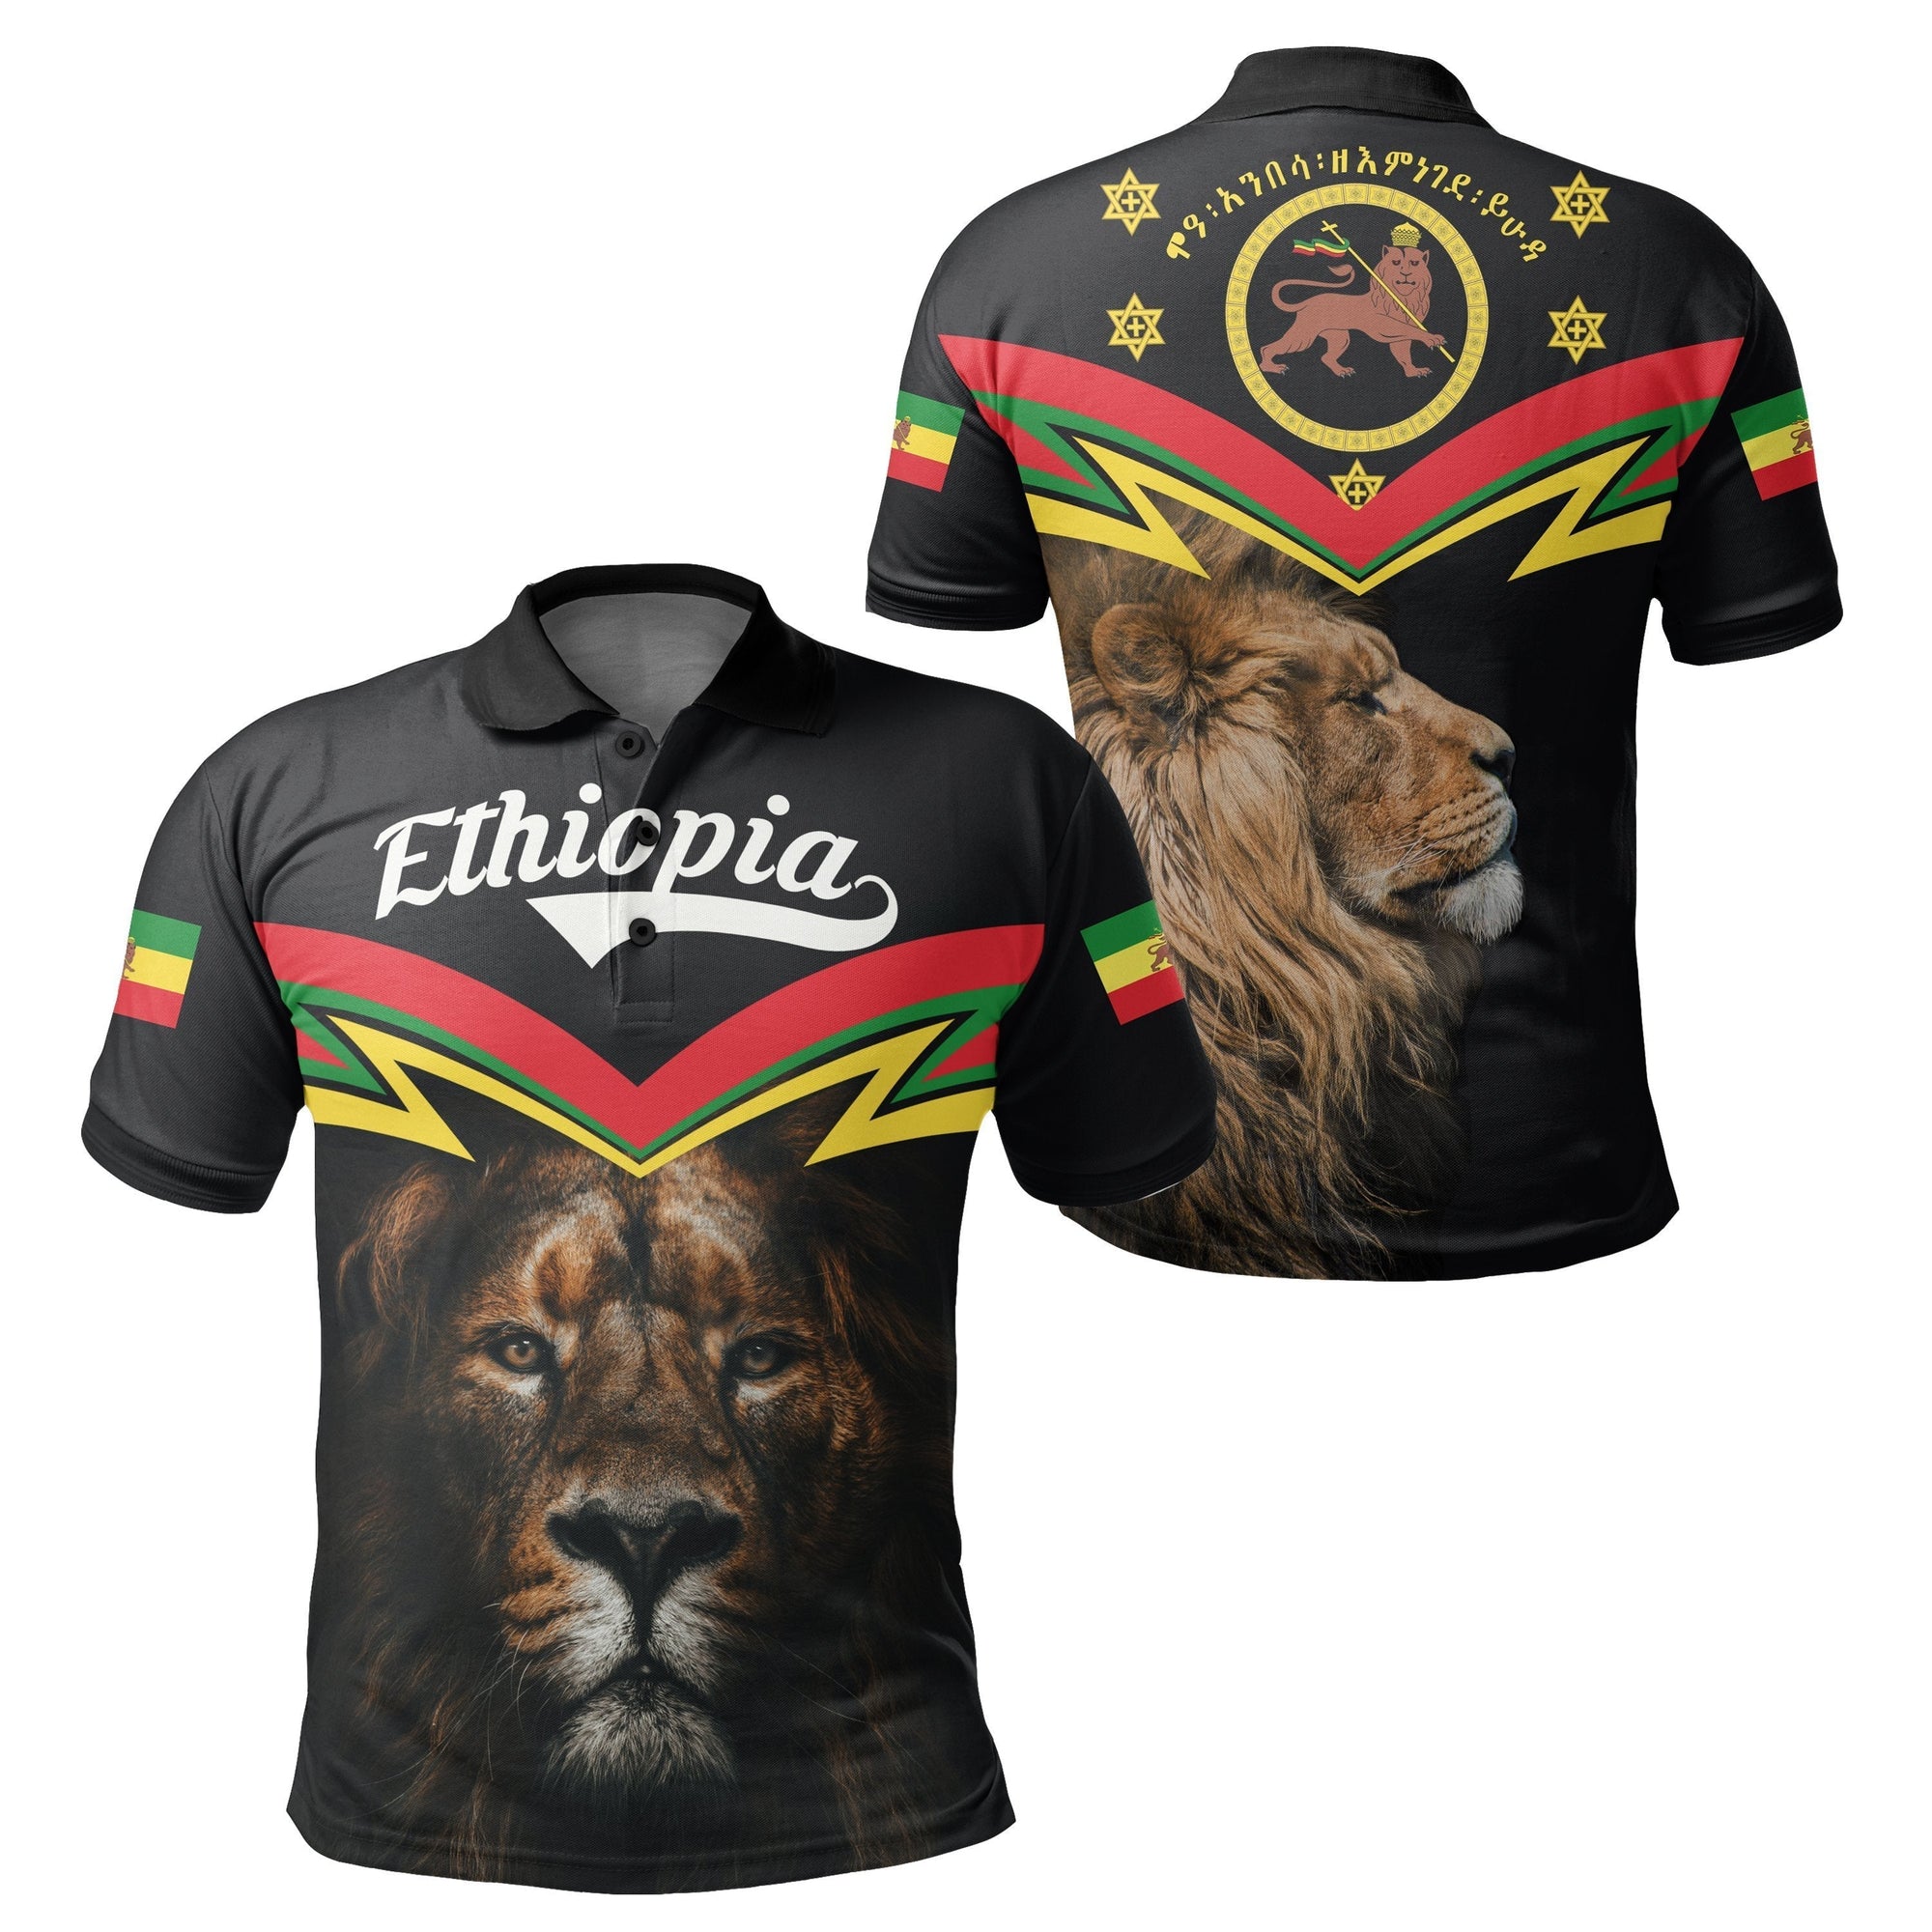 african-shirt-ethiopia-lion-roar-polo-shirt